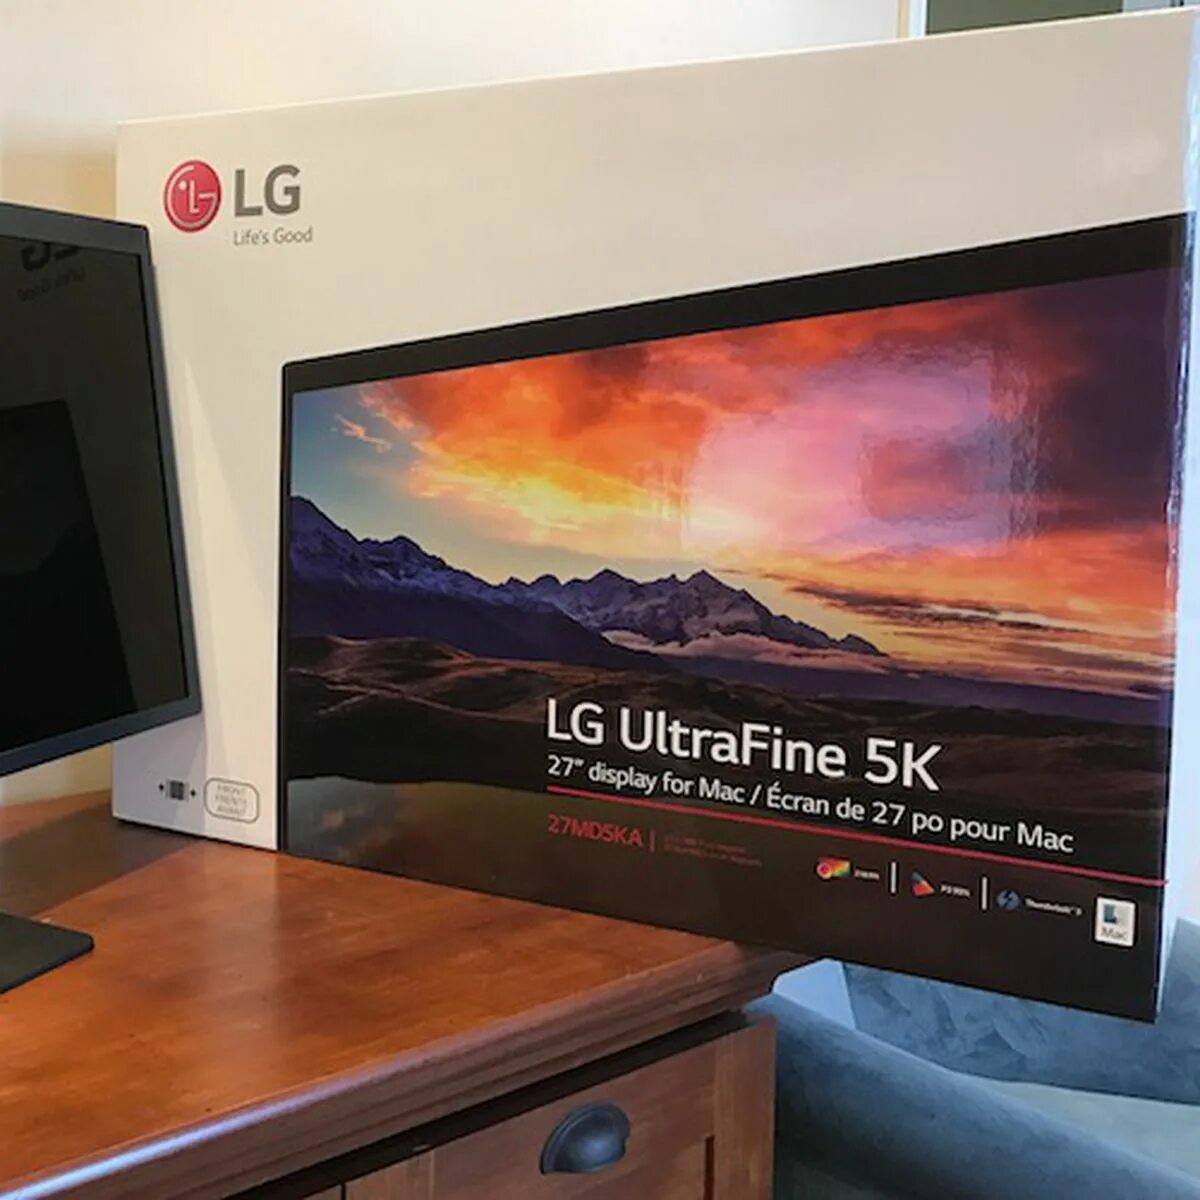 LG Ultrafine 5k display. LG 5k Ultrafine display 27. LG Ultra Fine 5k. LG Ultrafine display 5k 27 for Mac. Lg ultrafine купить